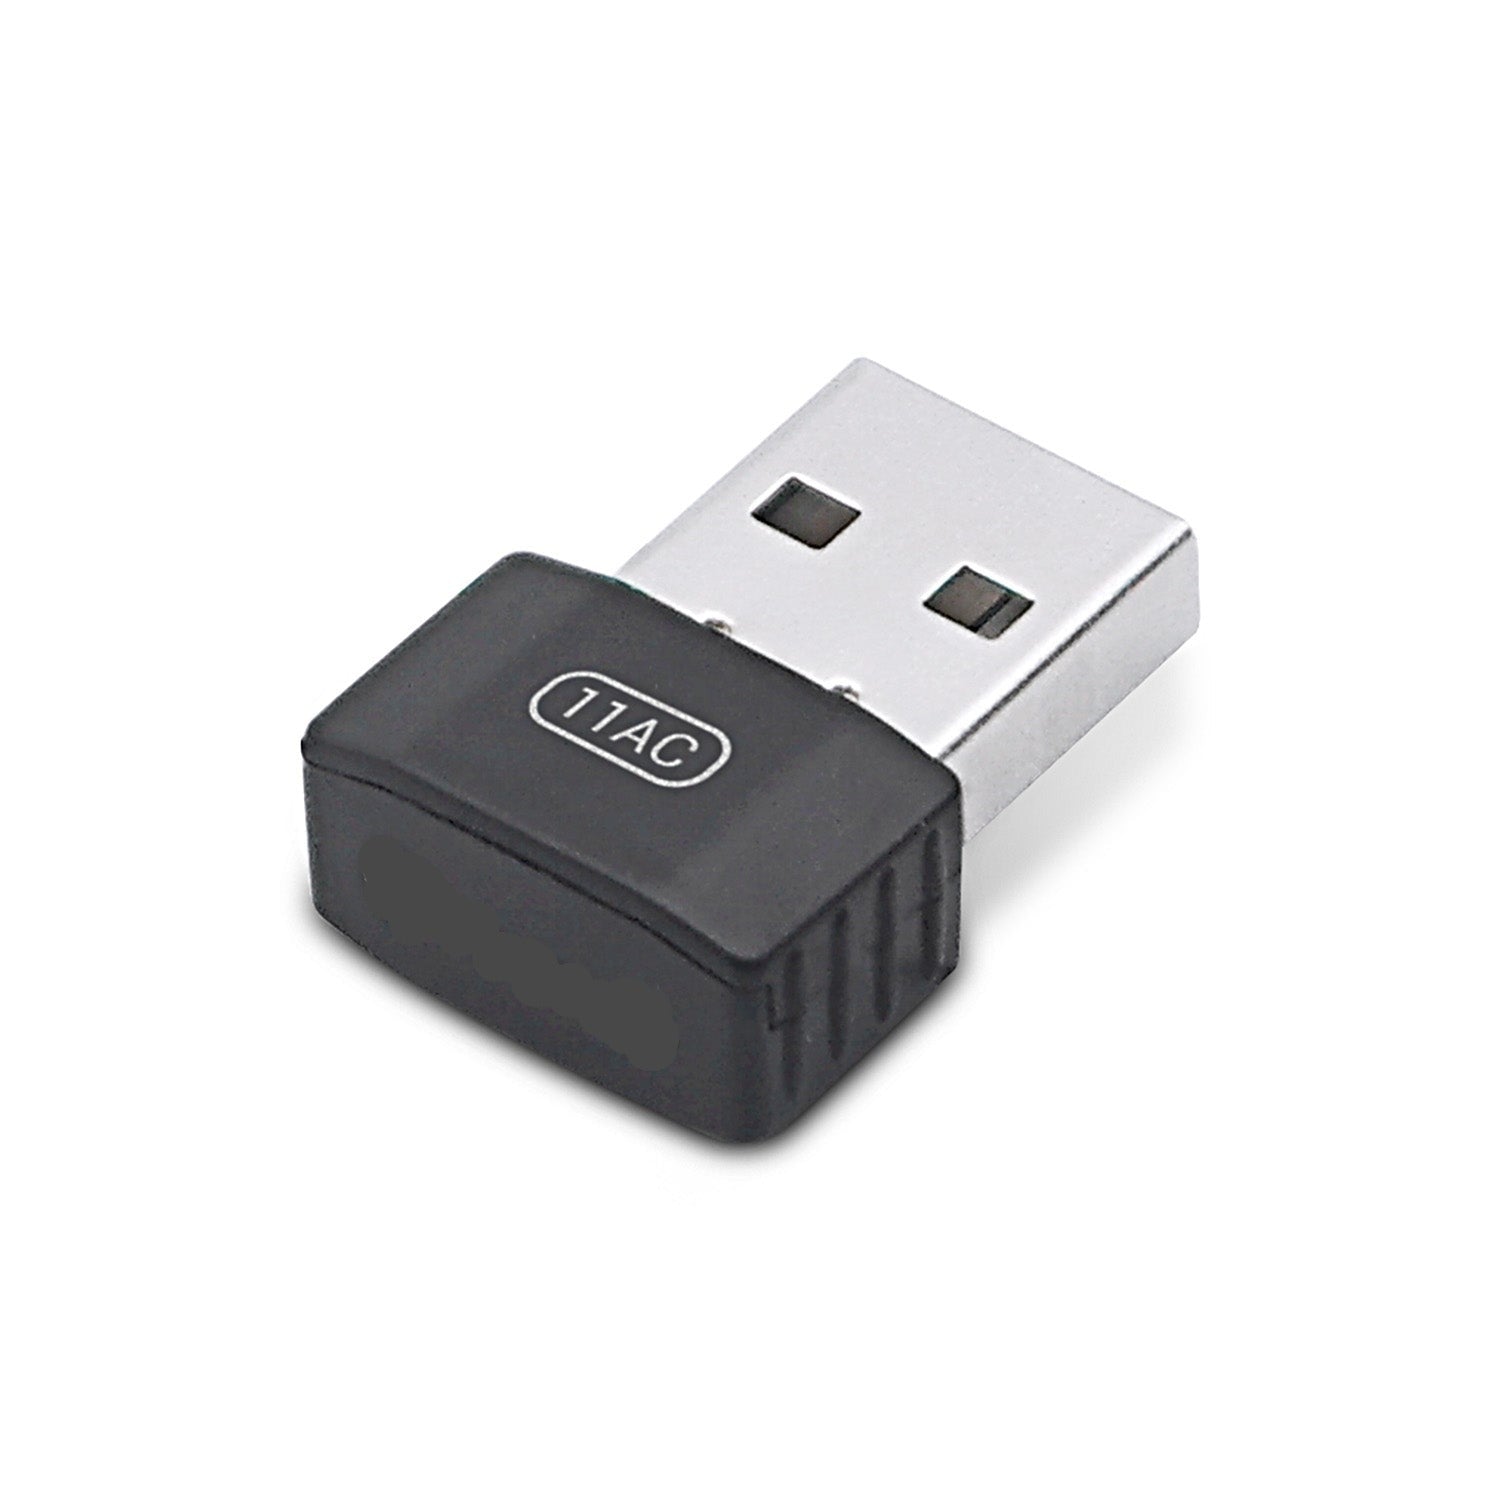 Compact 11AC USB Dongle